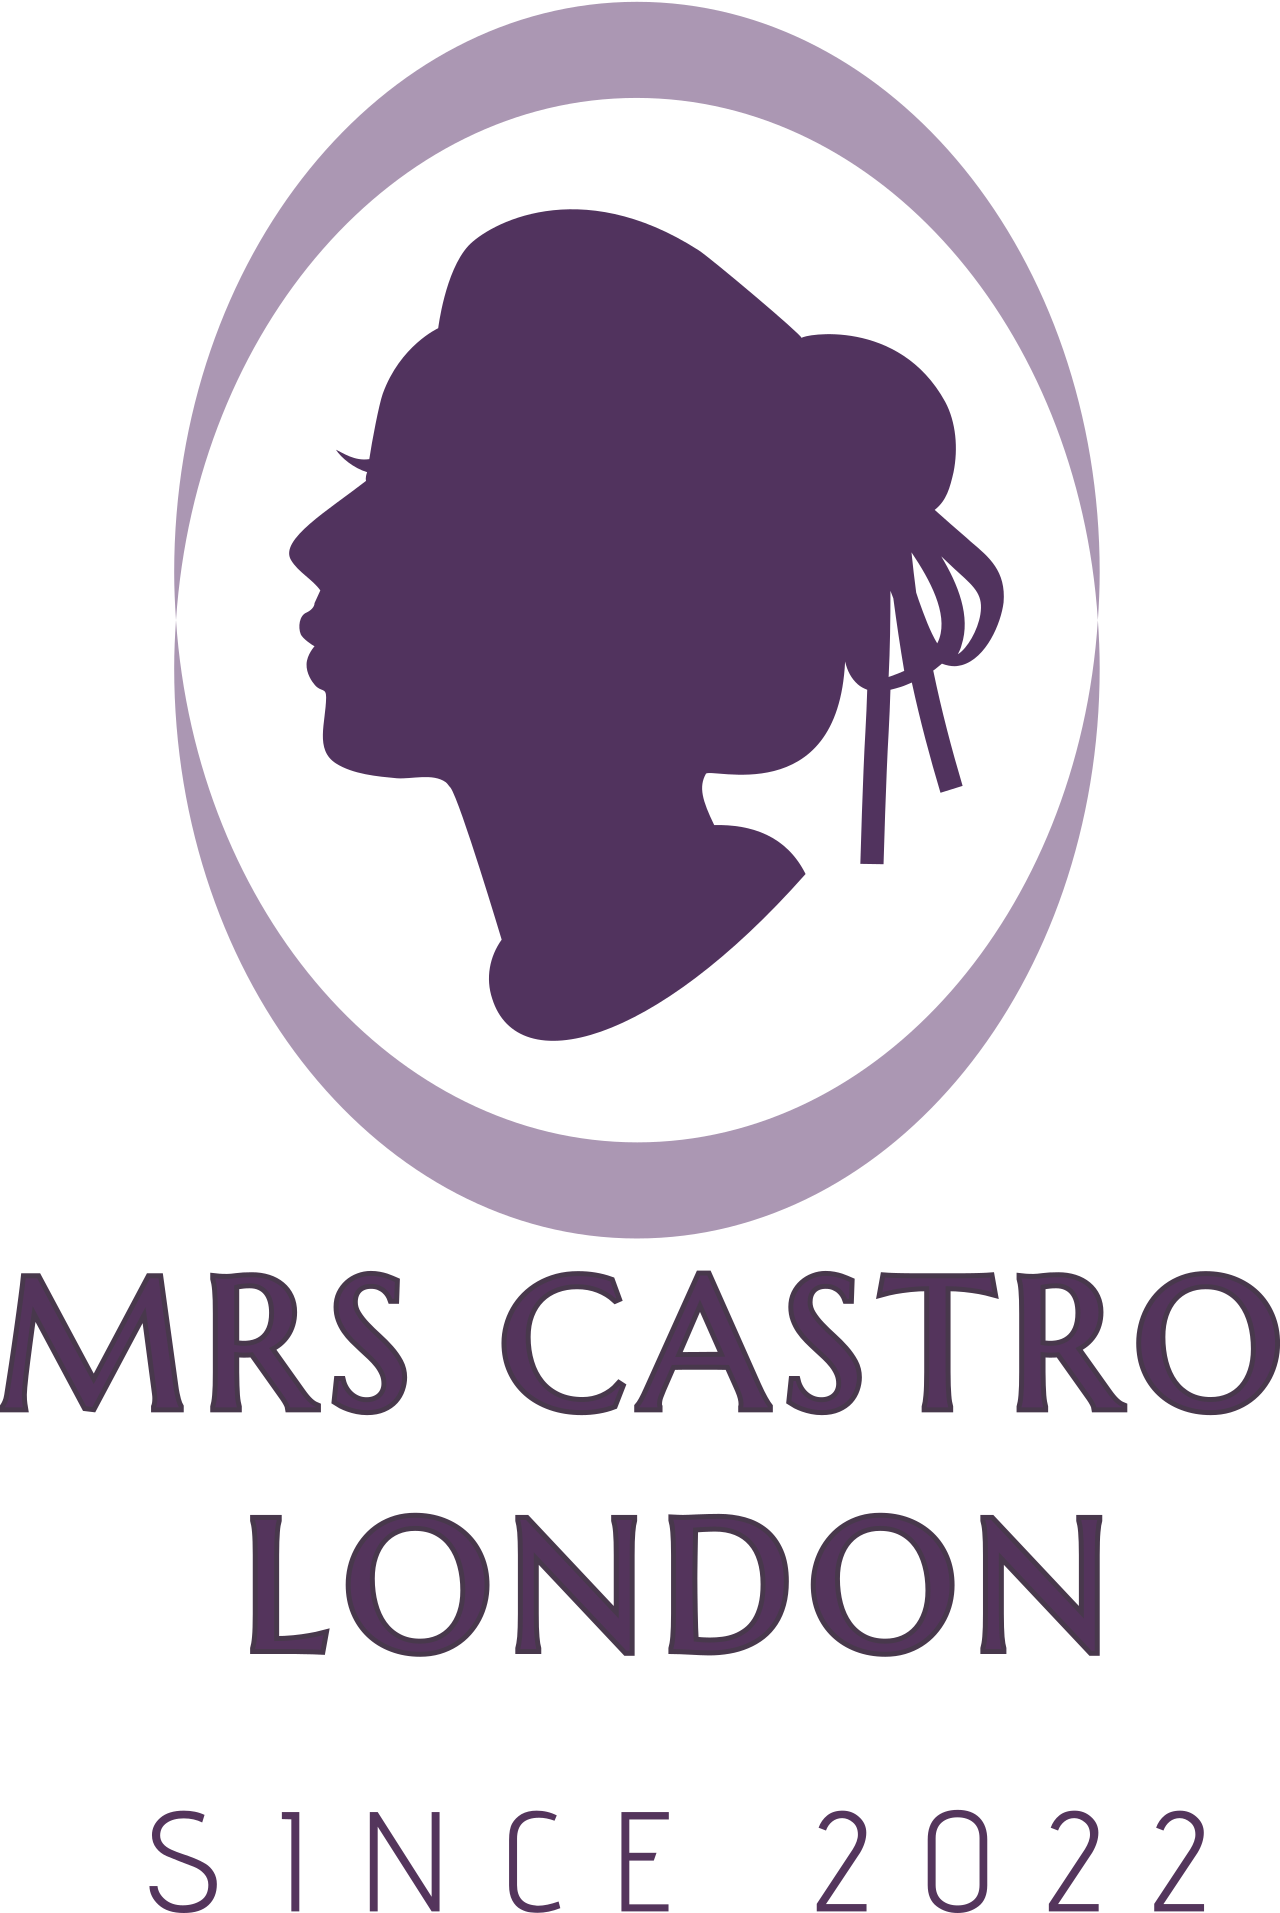 Mrs Castro 
London's logo